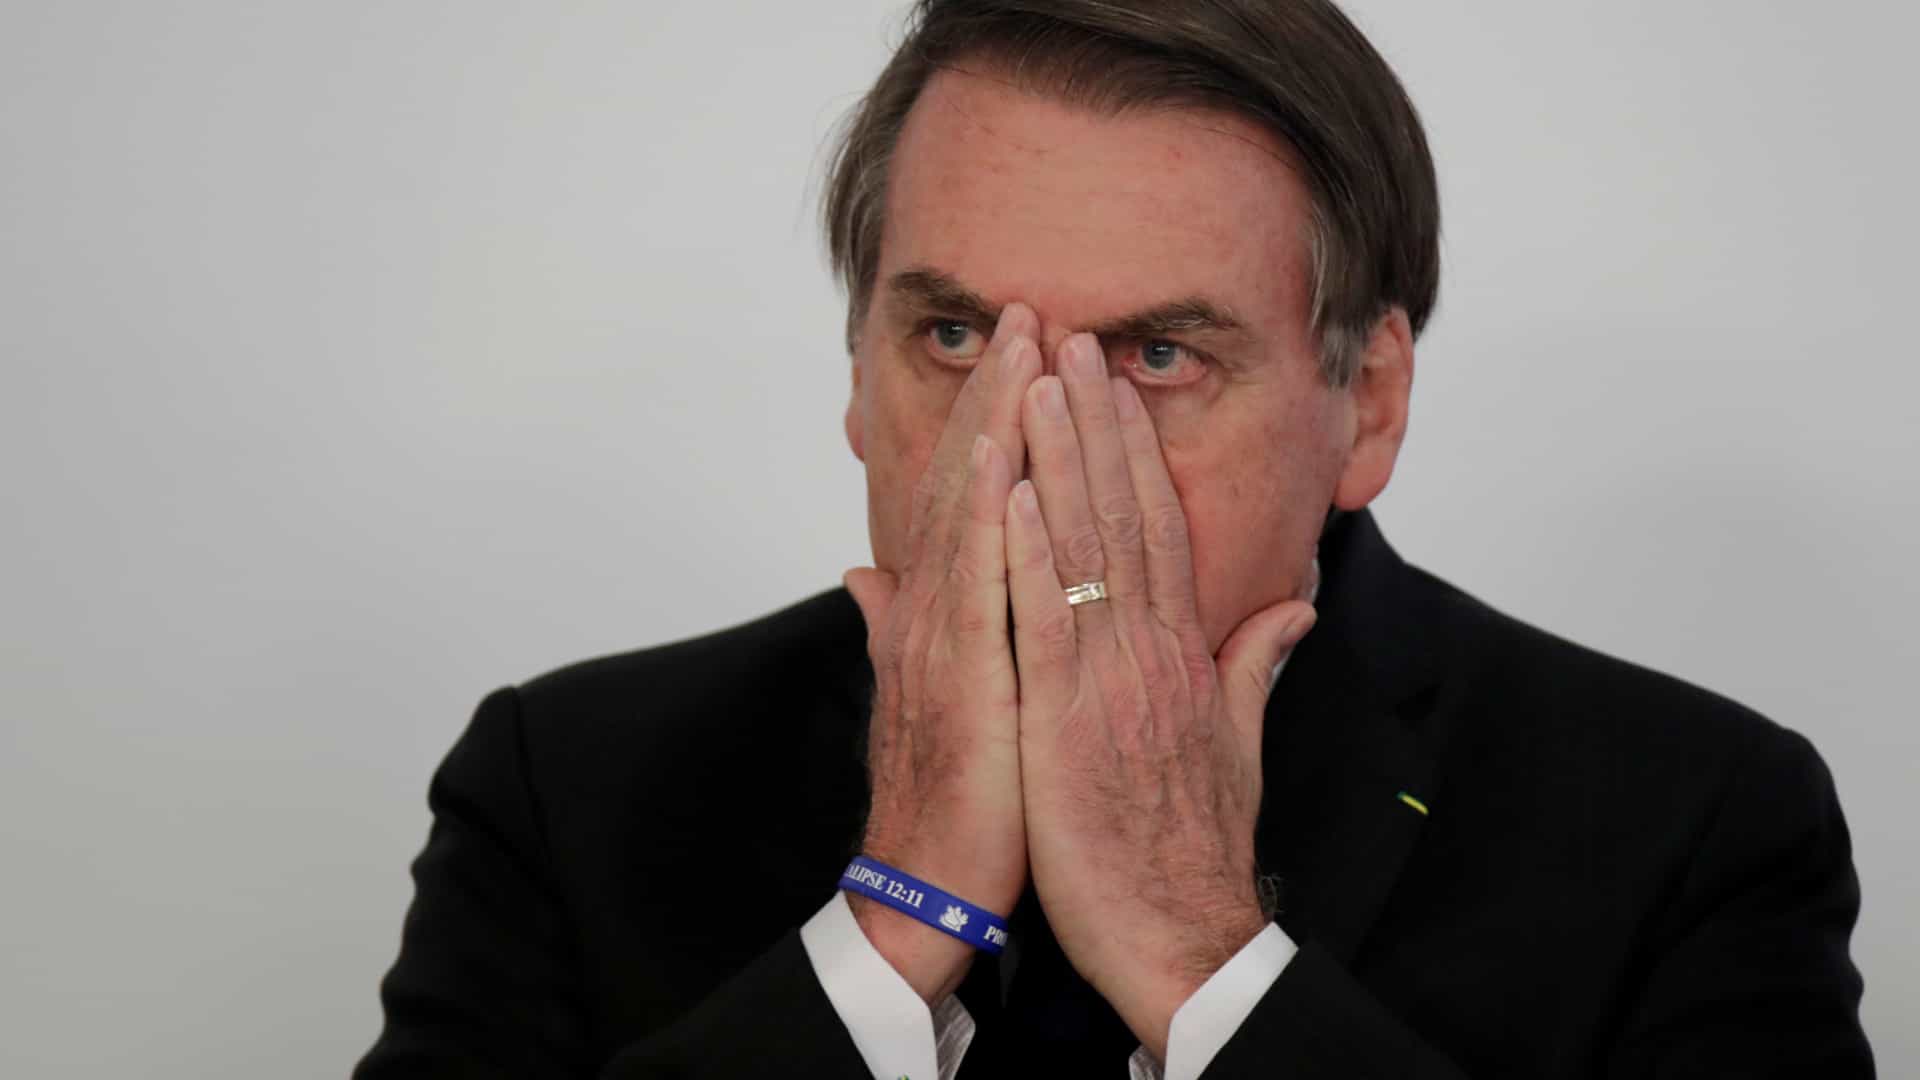 Câmara dá 30 dias para Bolsonaro apresentar exame de coronavírus